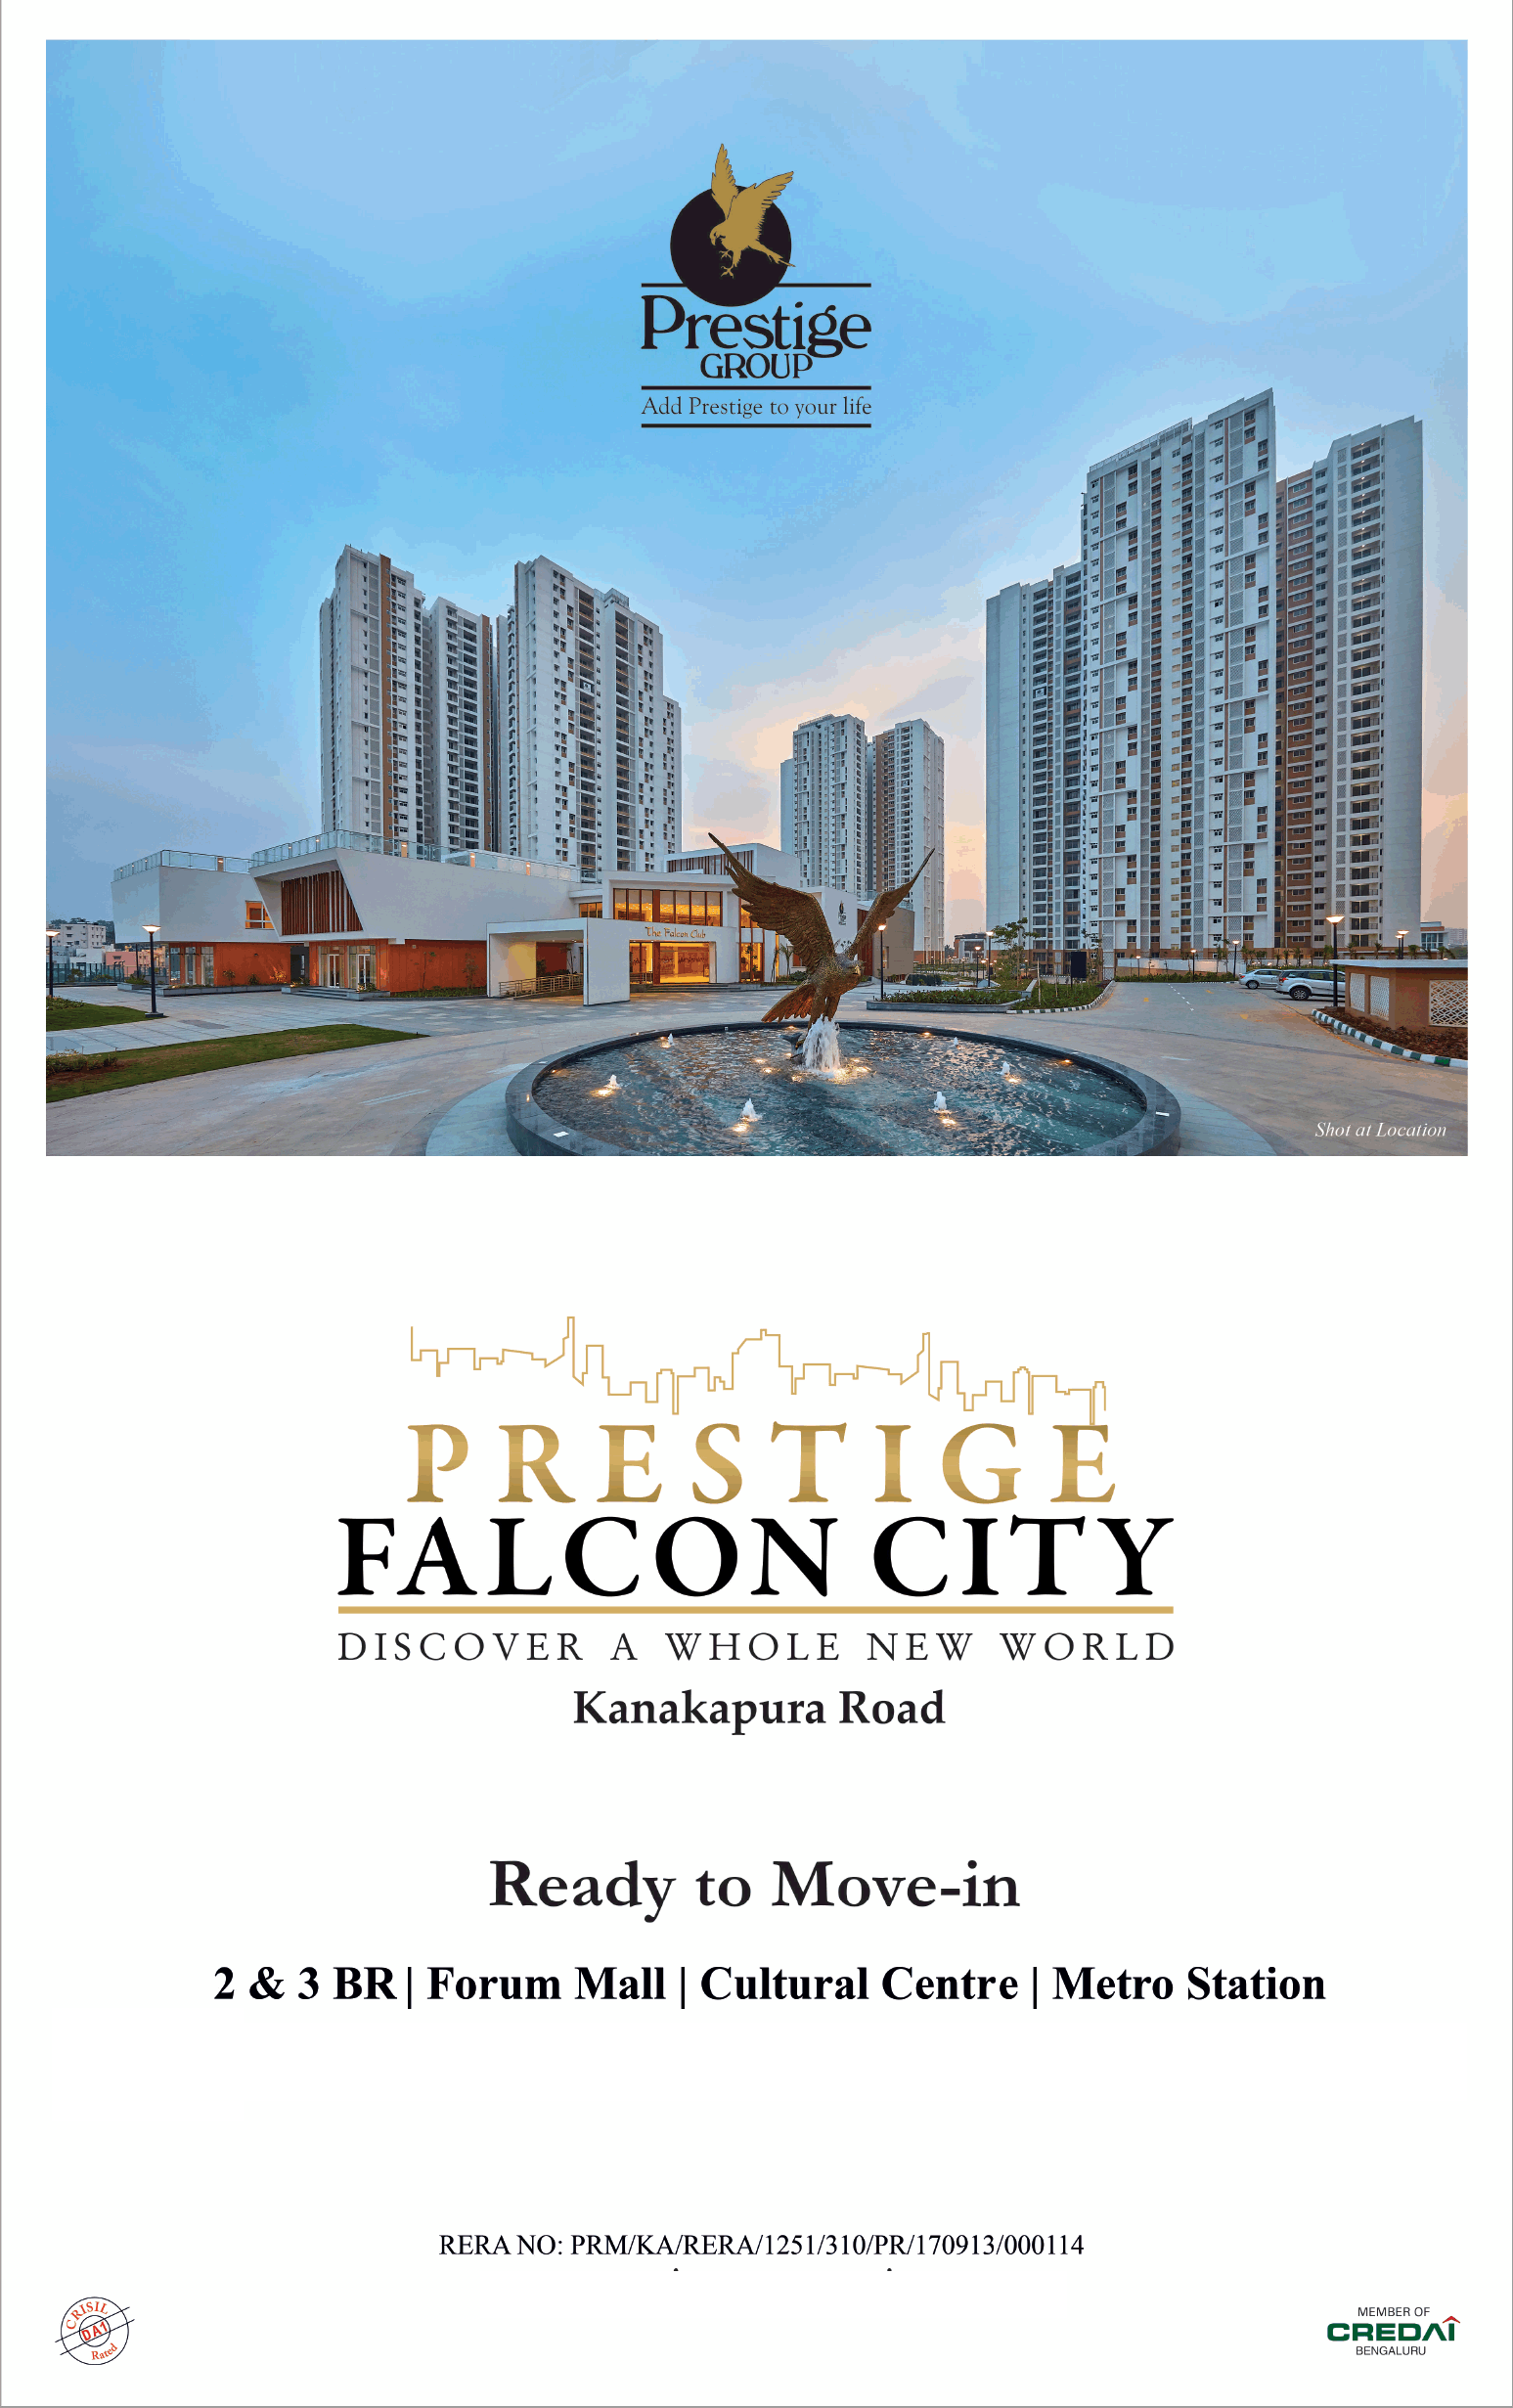 Book ready to move in apartments at Prestige Falcon City, Bangalore Update